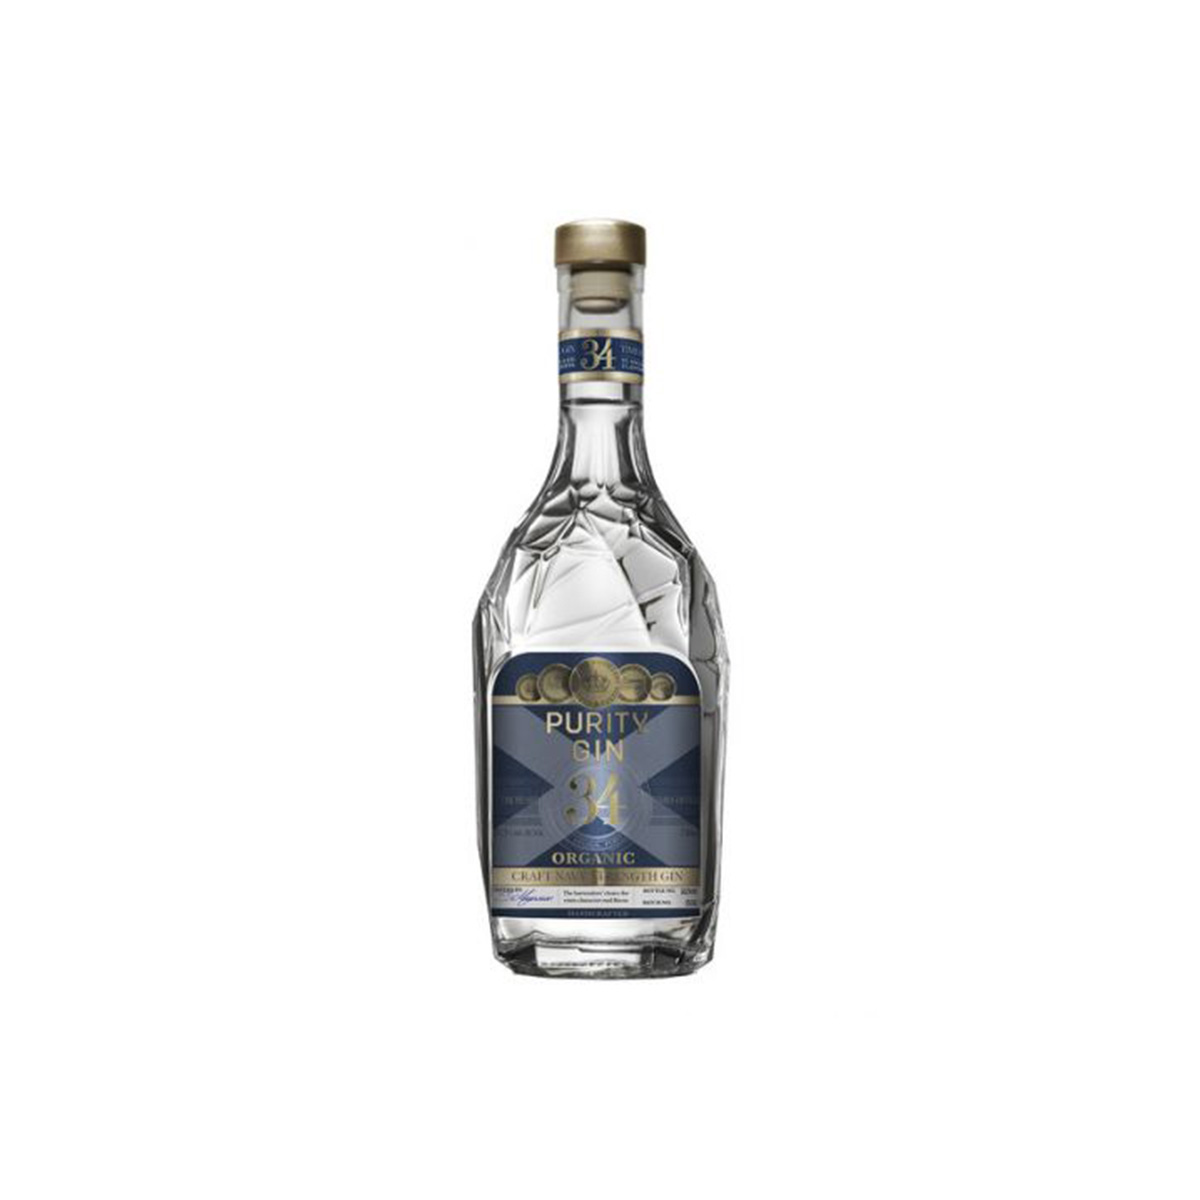 Purity Gin 34 Navy Strength Organic